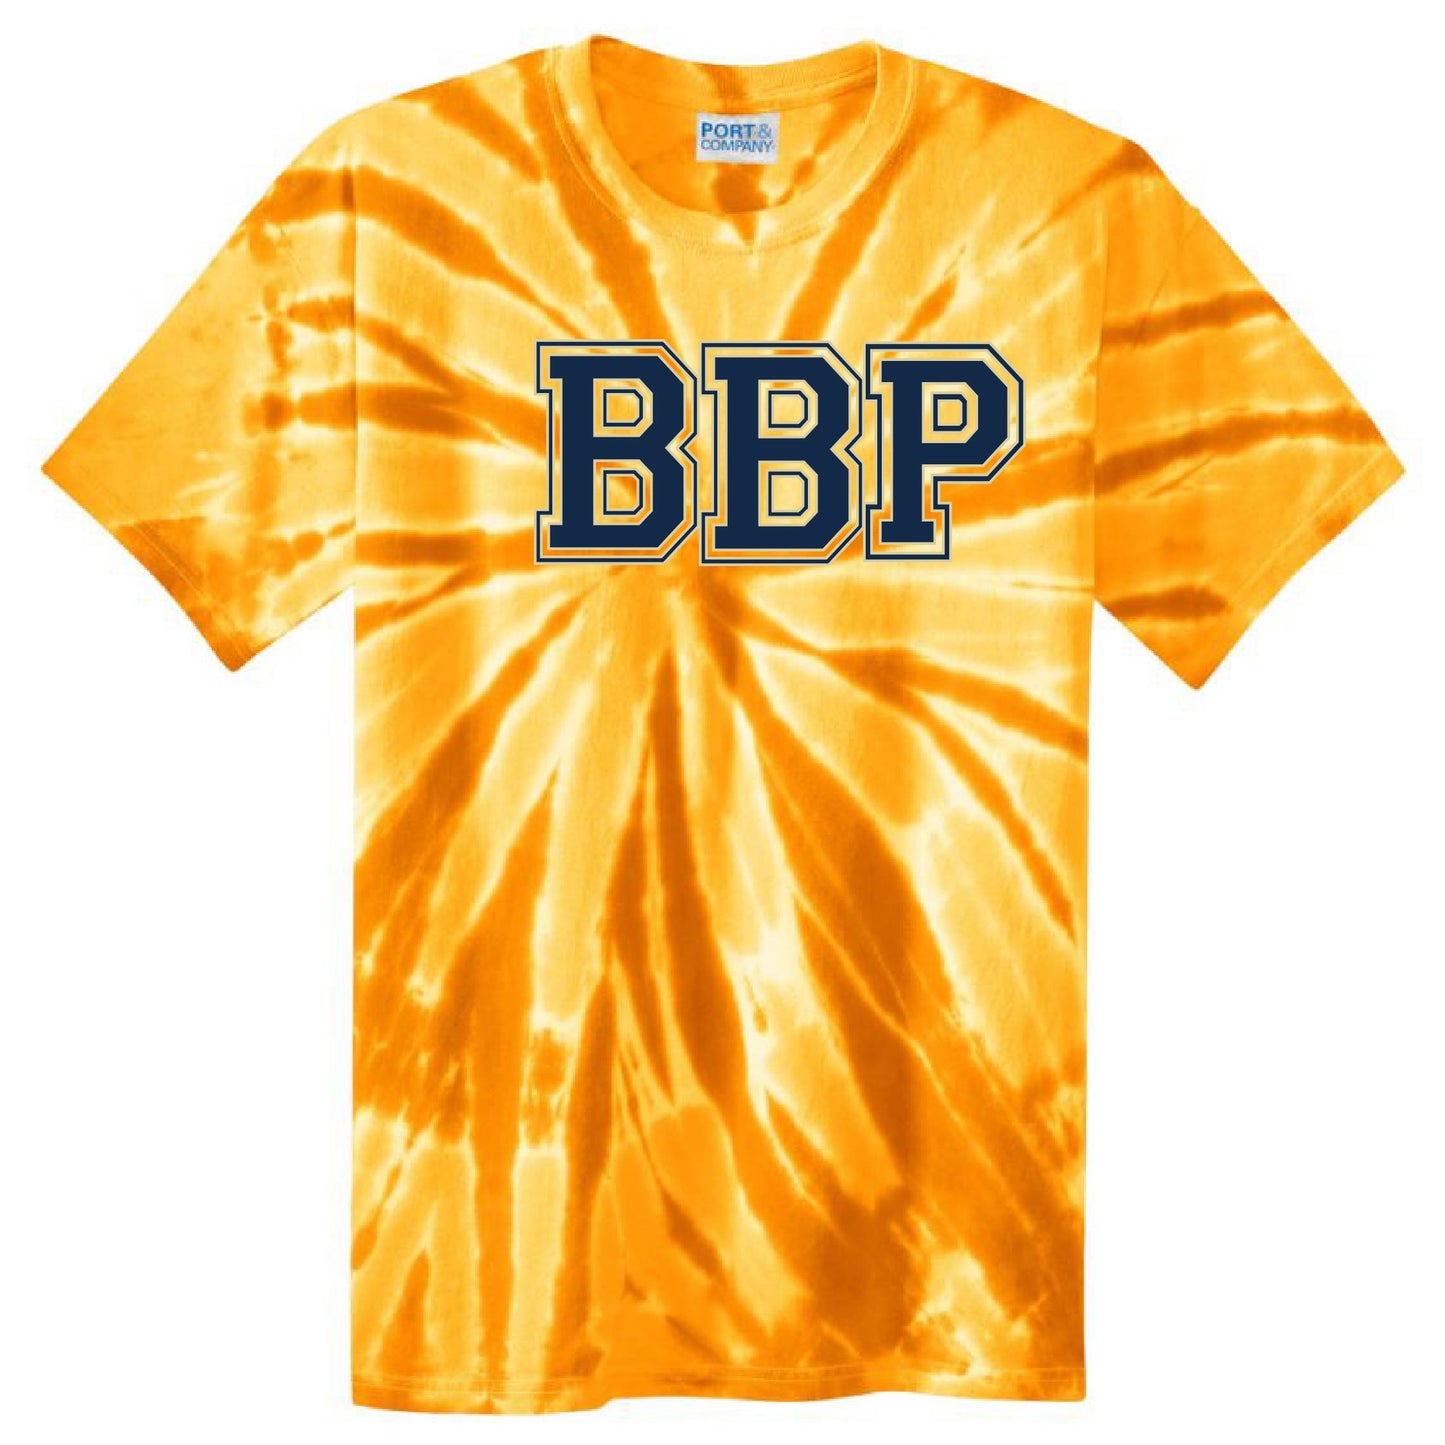 Bayport-Bluepoint "BBP" Tye Dye T Shirt